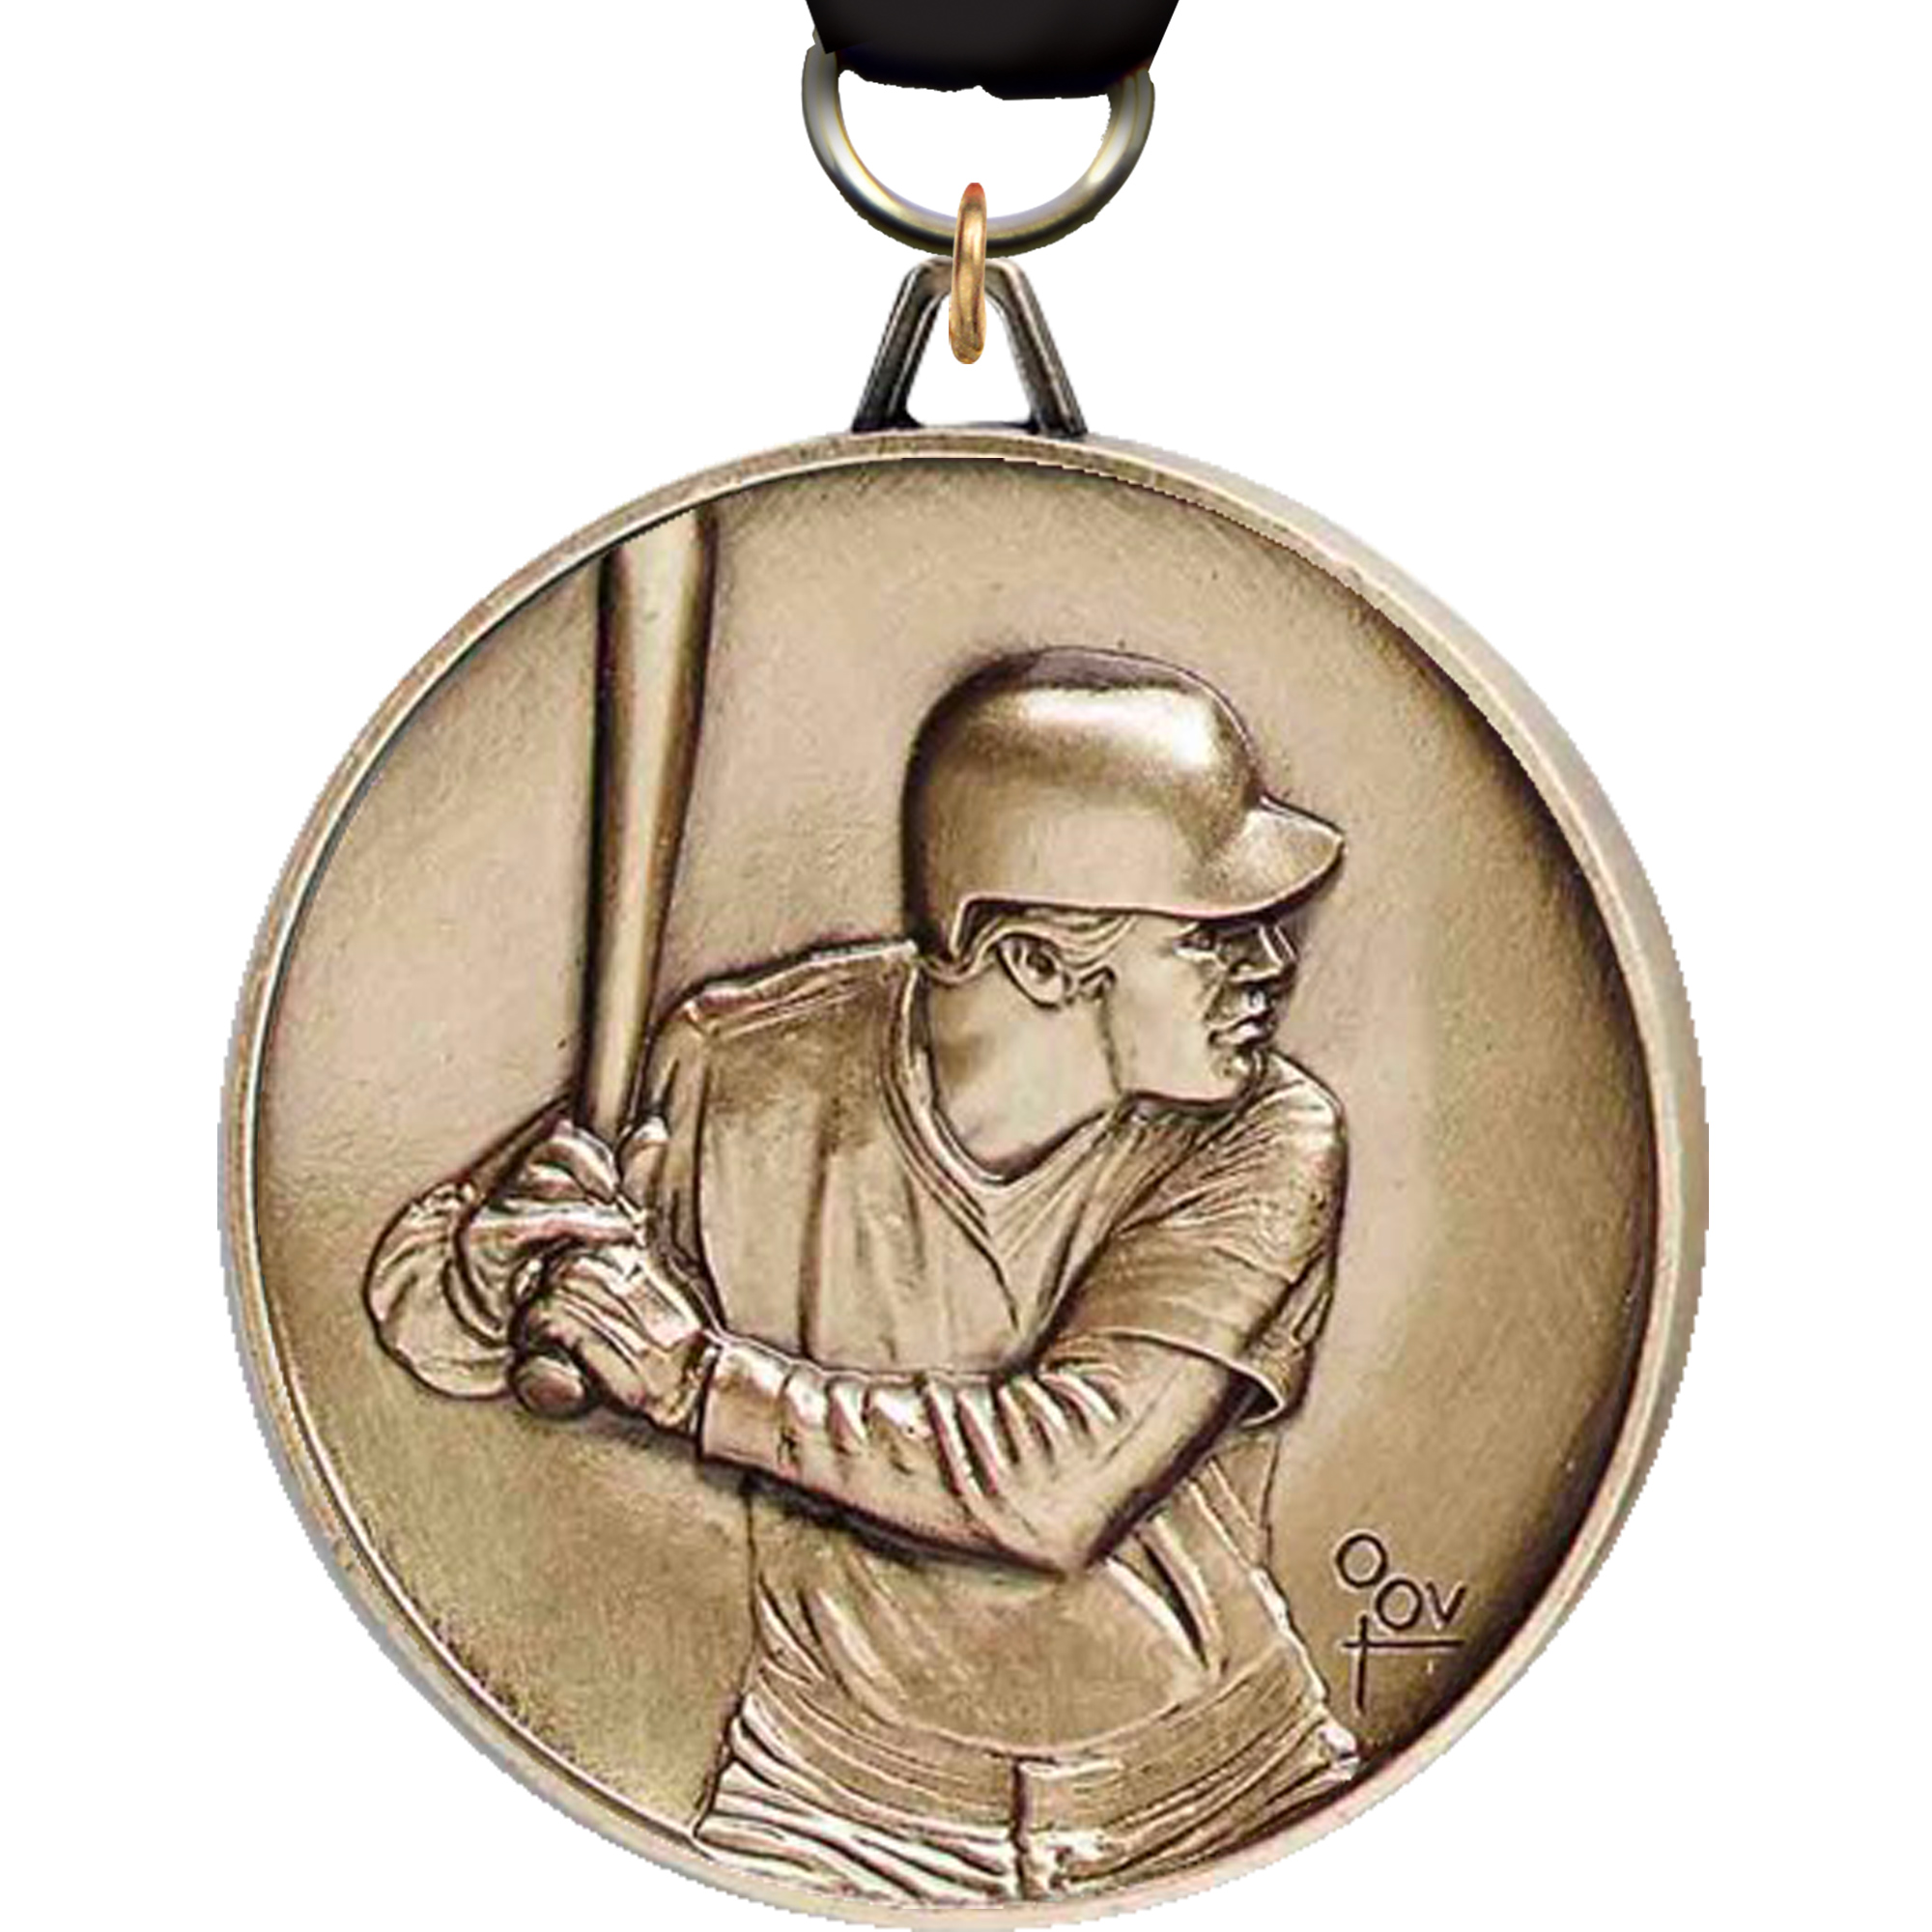 2.5 inch Premium Satin Finish Medal - Baseball